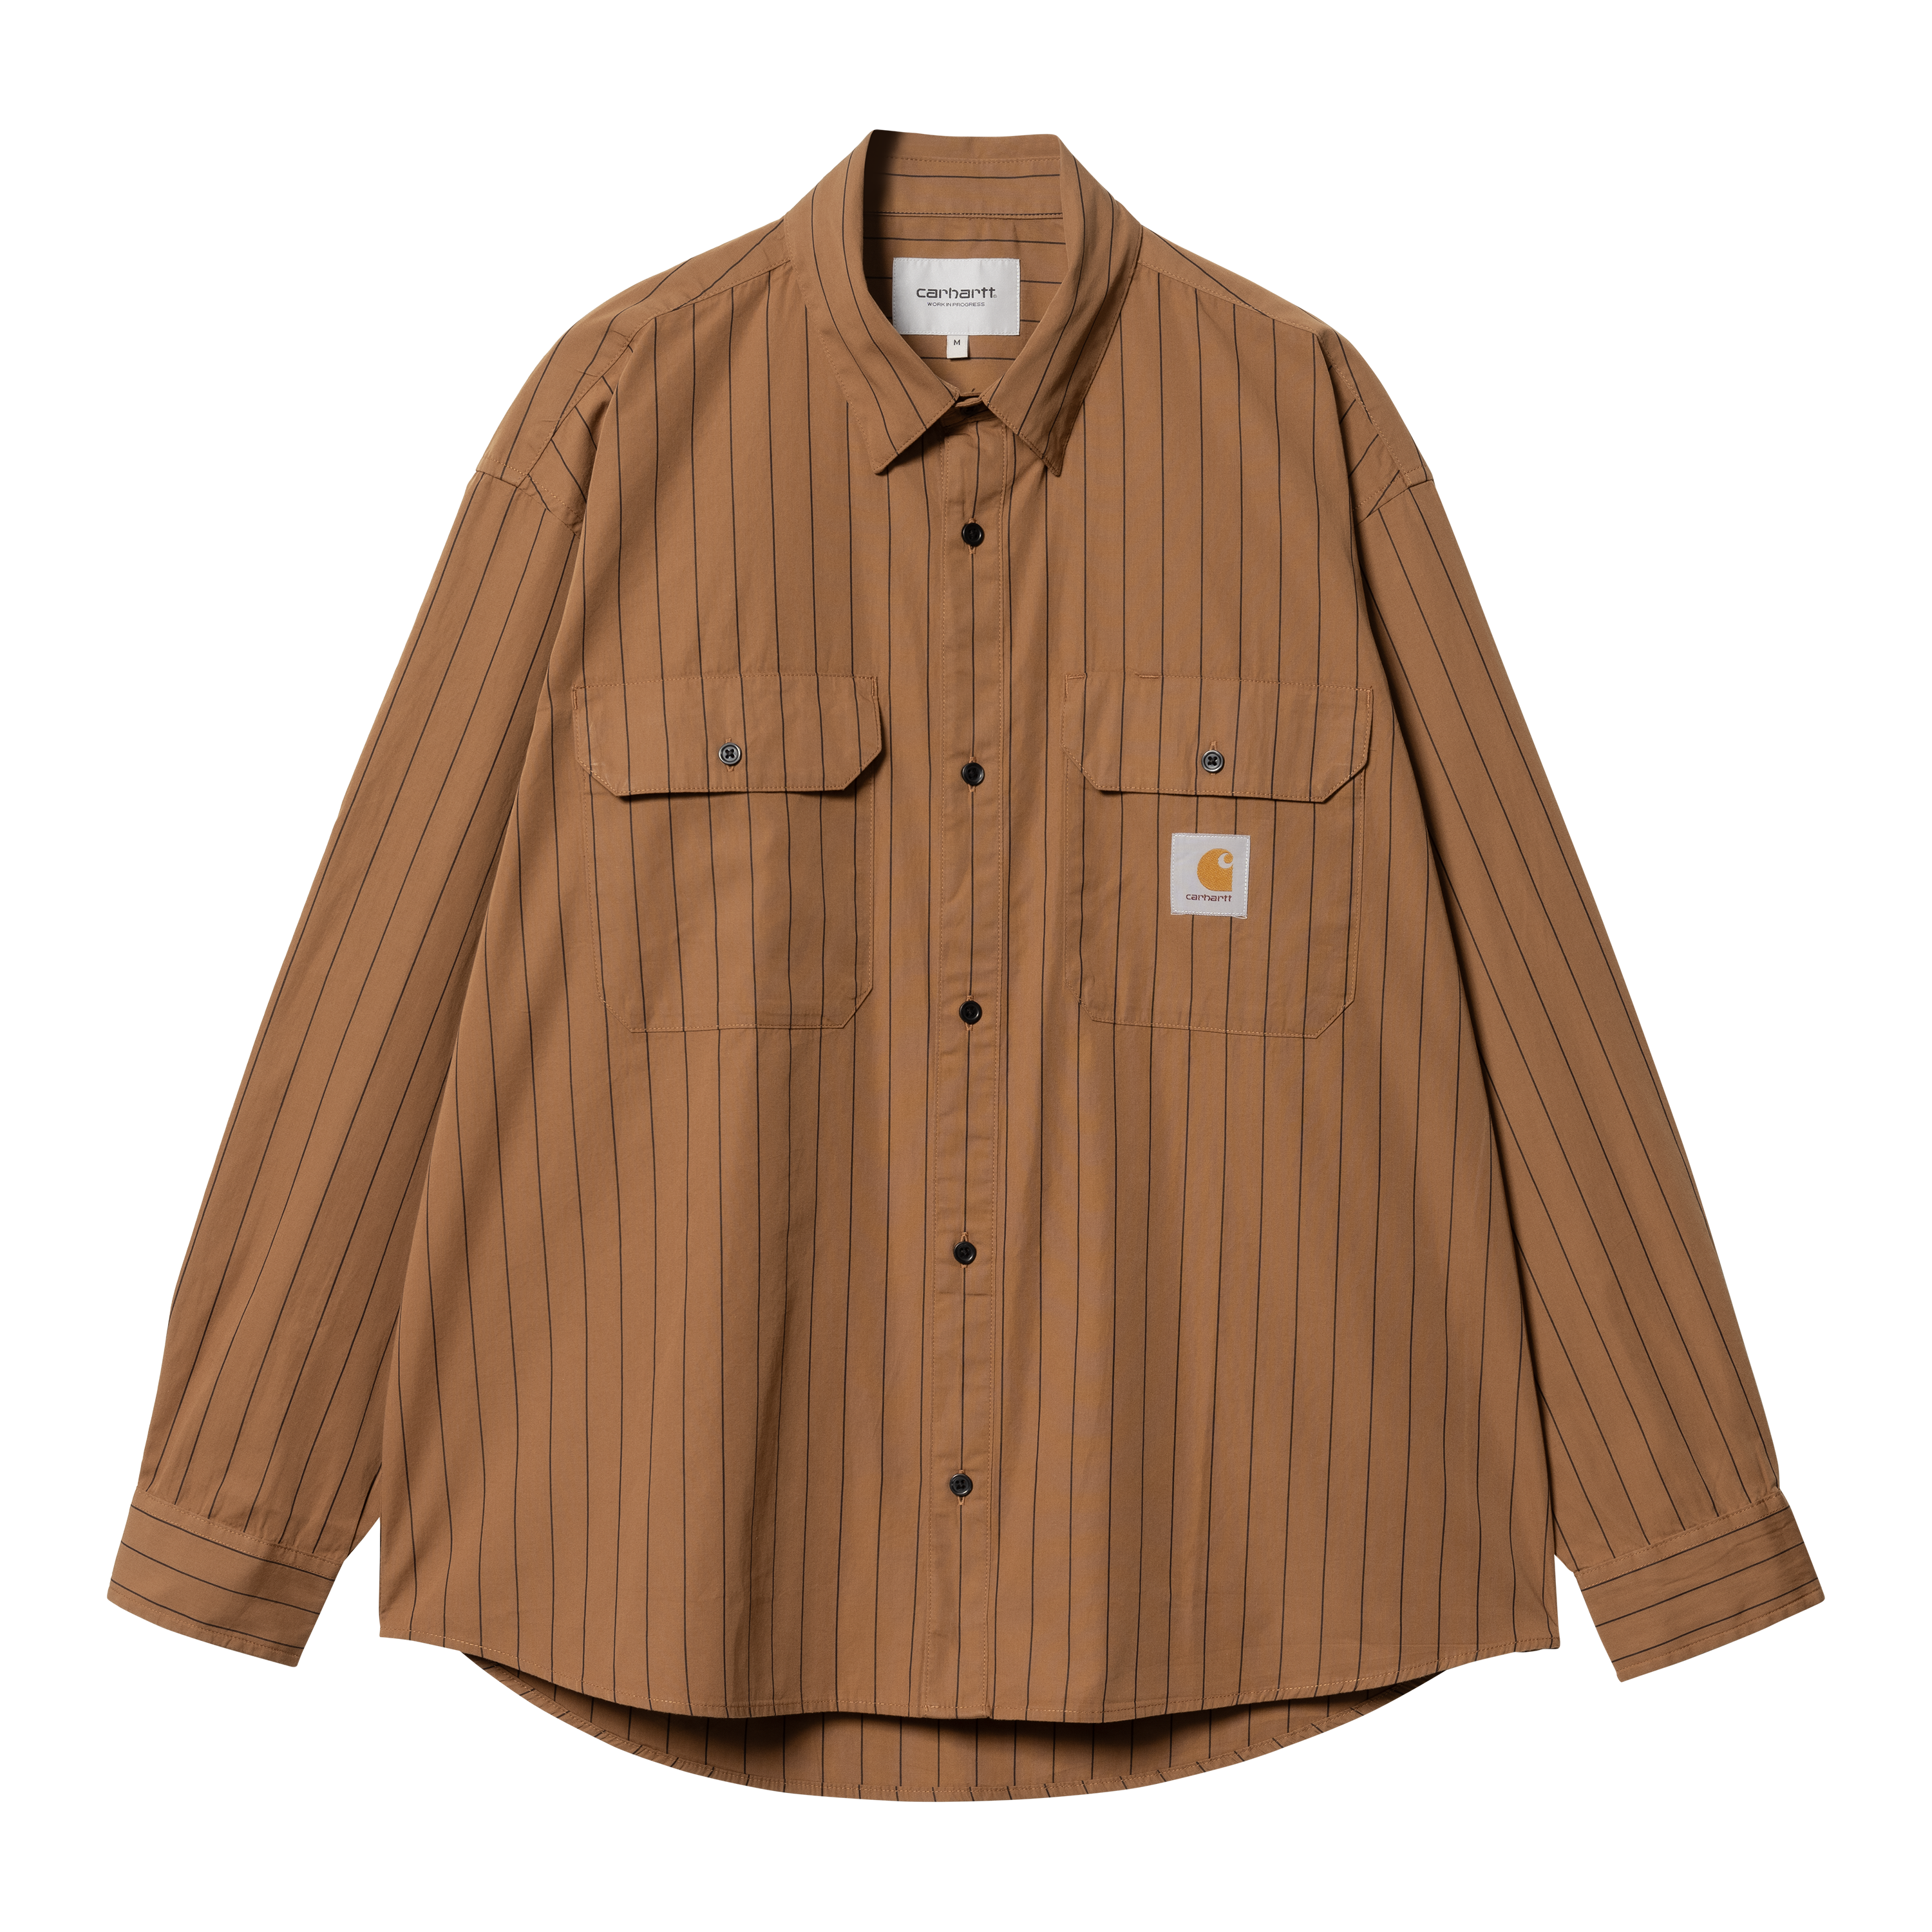 Carhartt WIP Long Sleeve Orlean Shirt in Braun